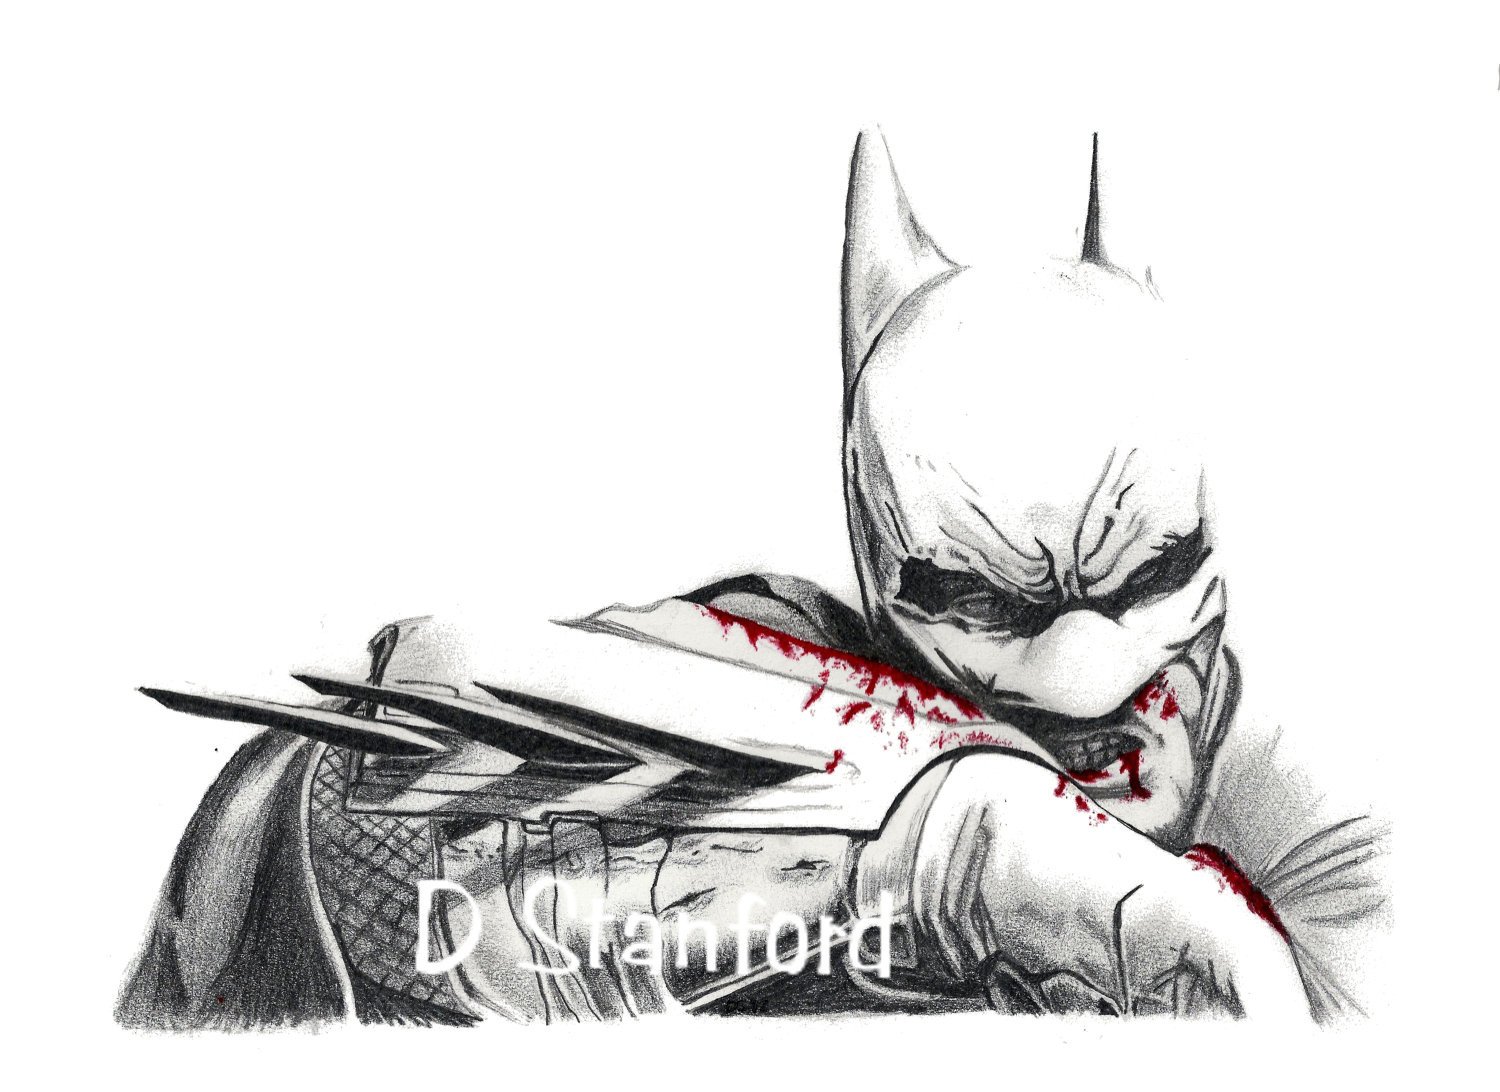 Items similar to Pencil Sketch "Even Batman Bleeds" Print